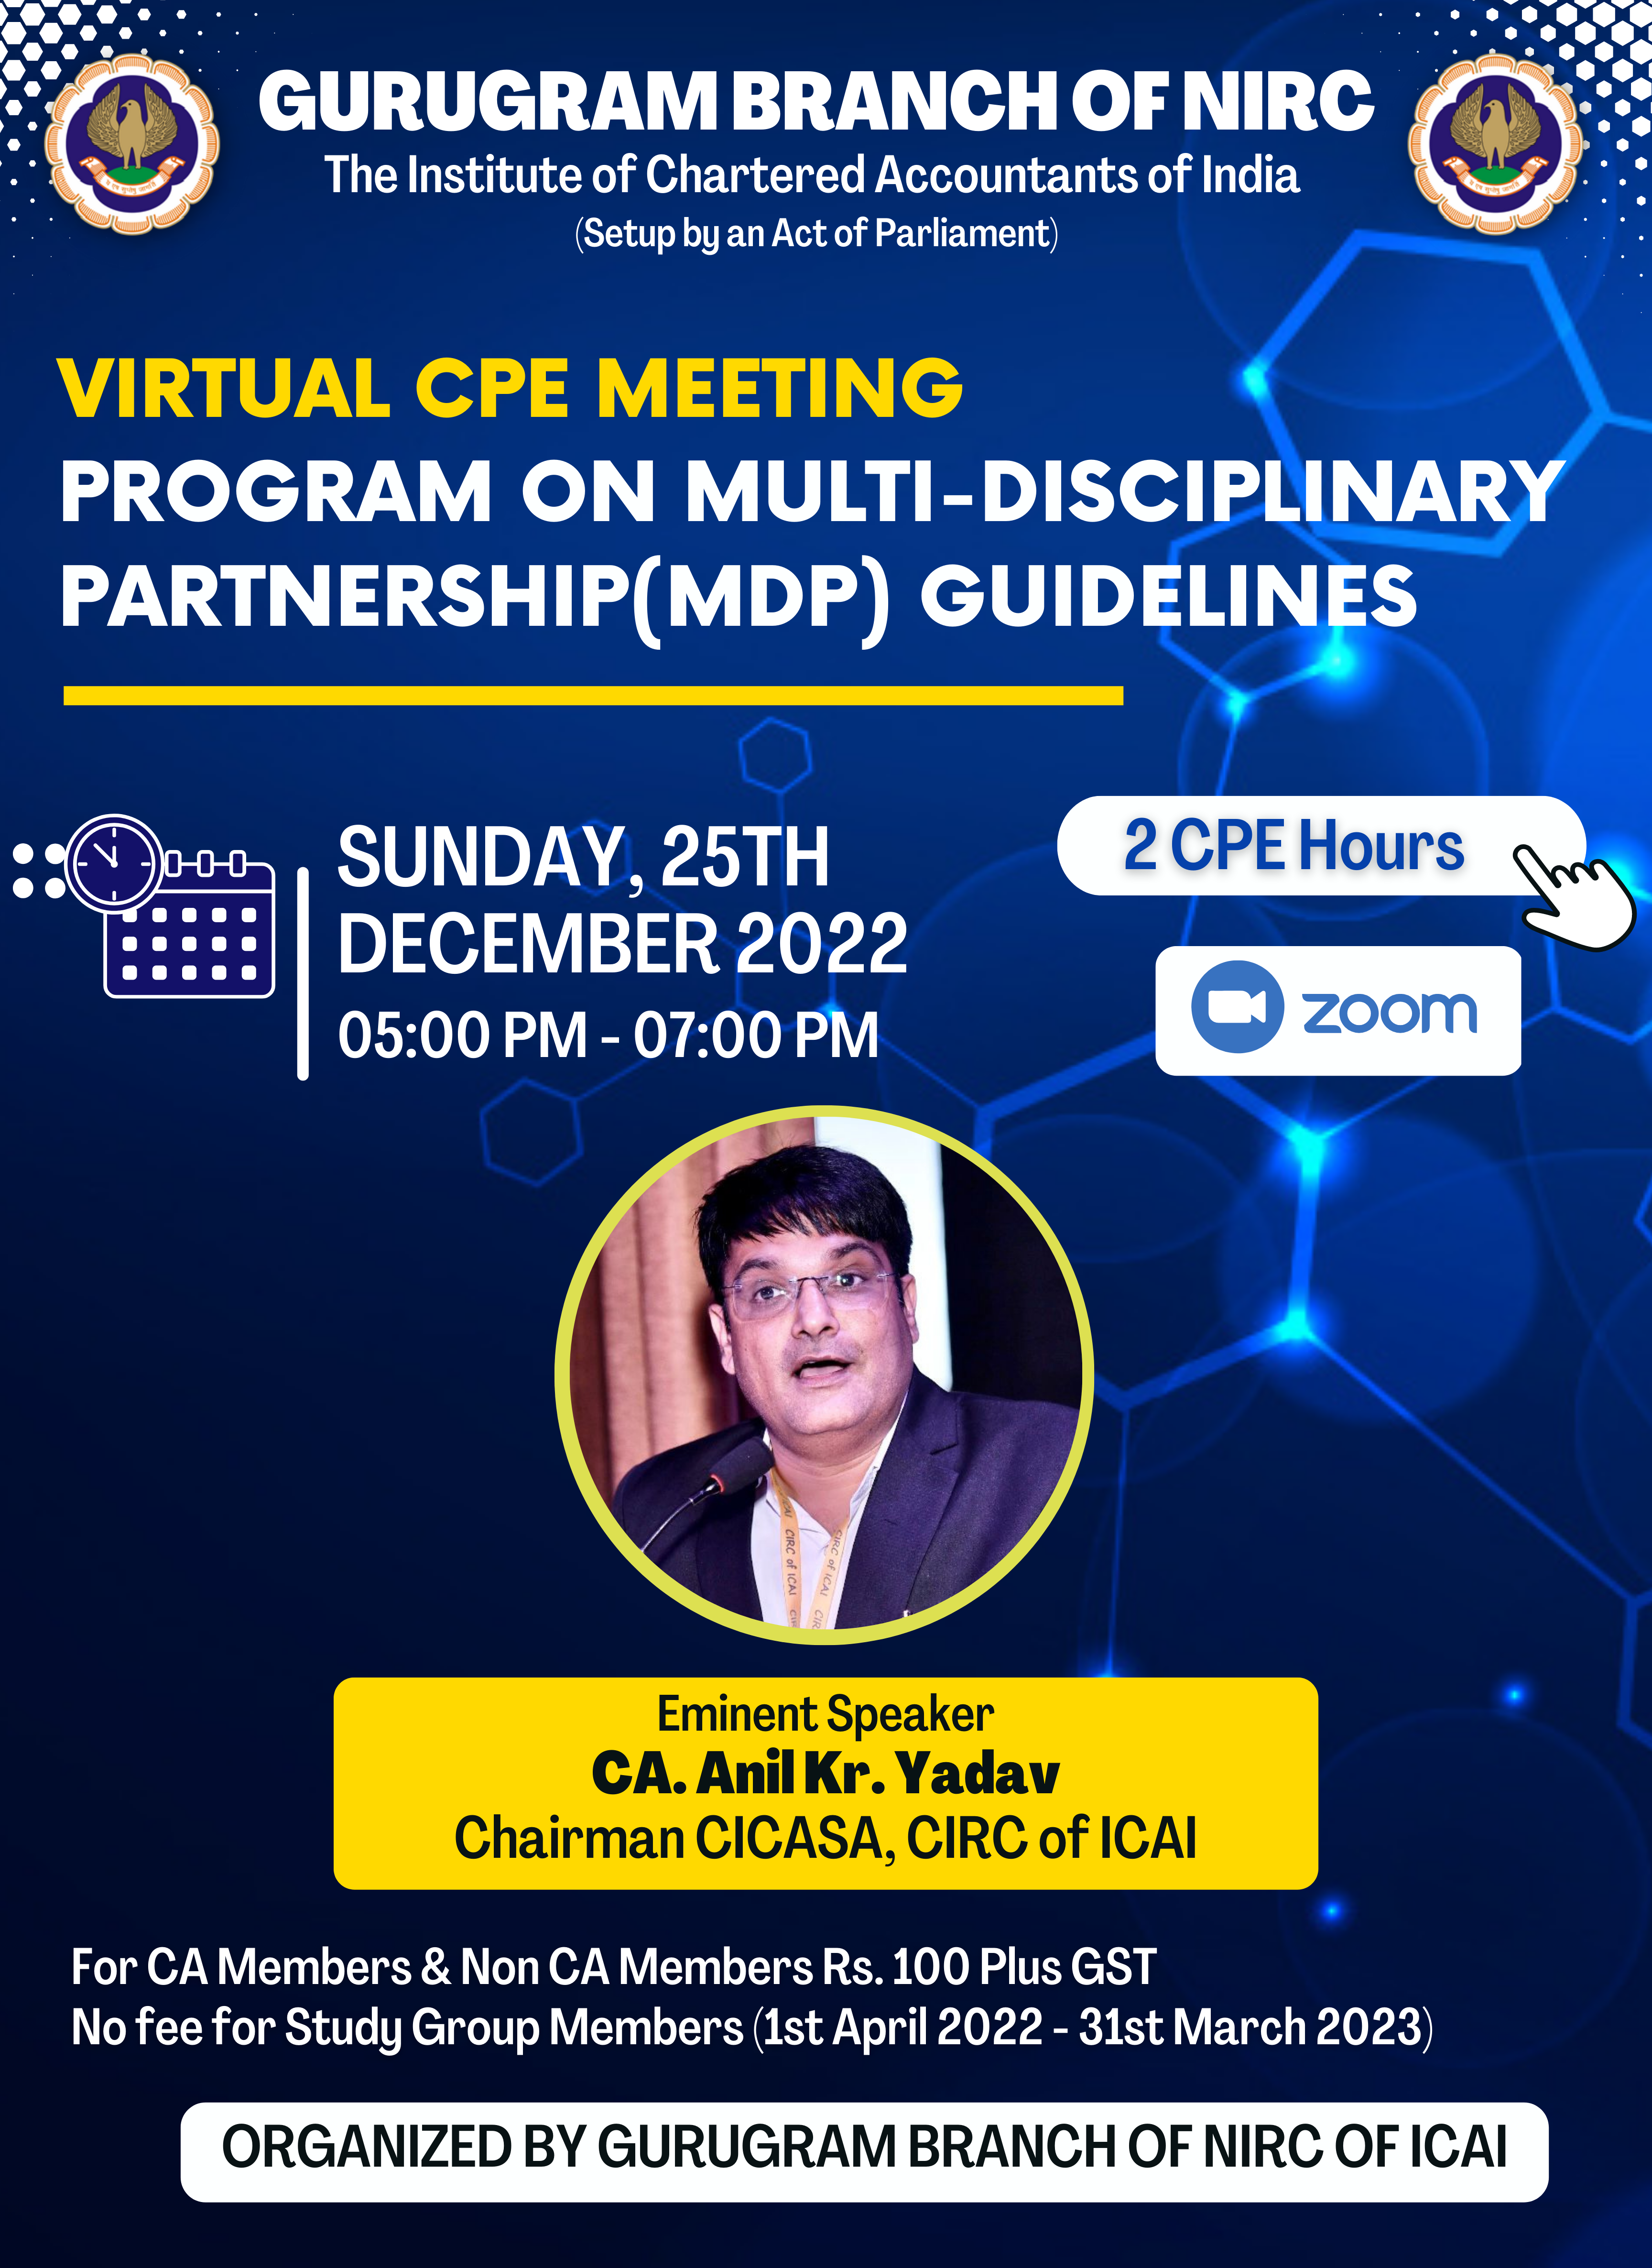 Virtual CPE programme on Multi-Disciplinary Partnership (MDP) Guidelines